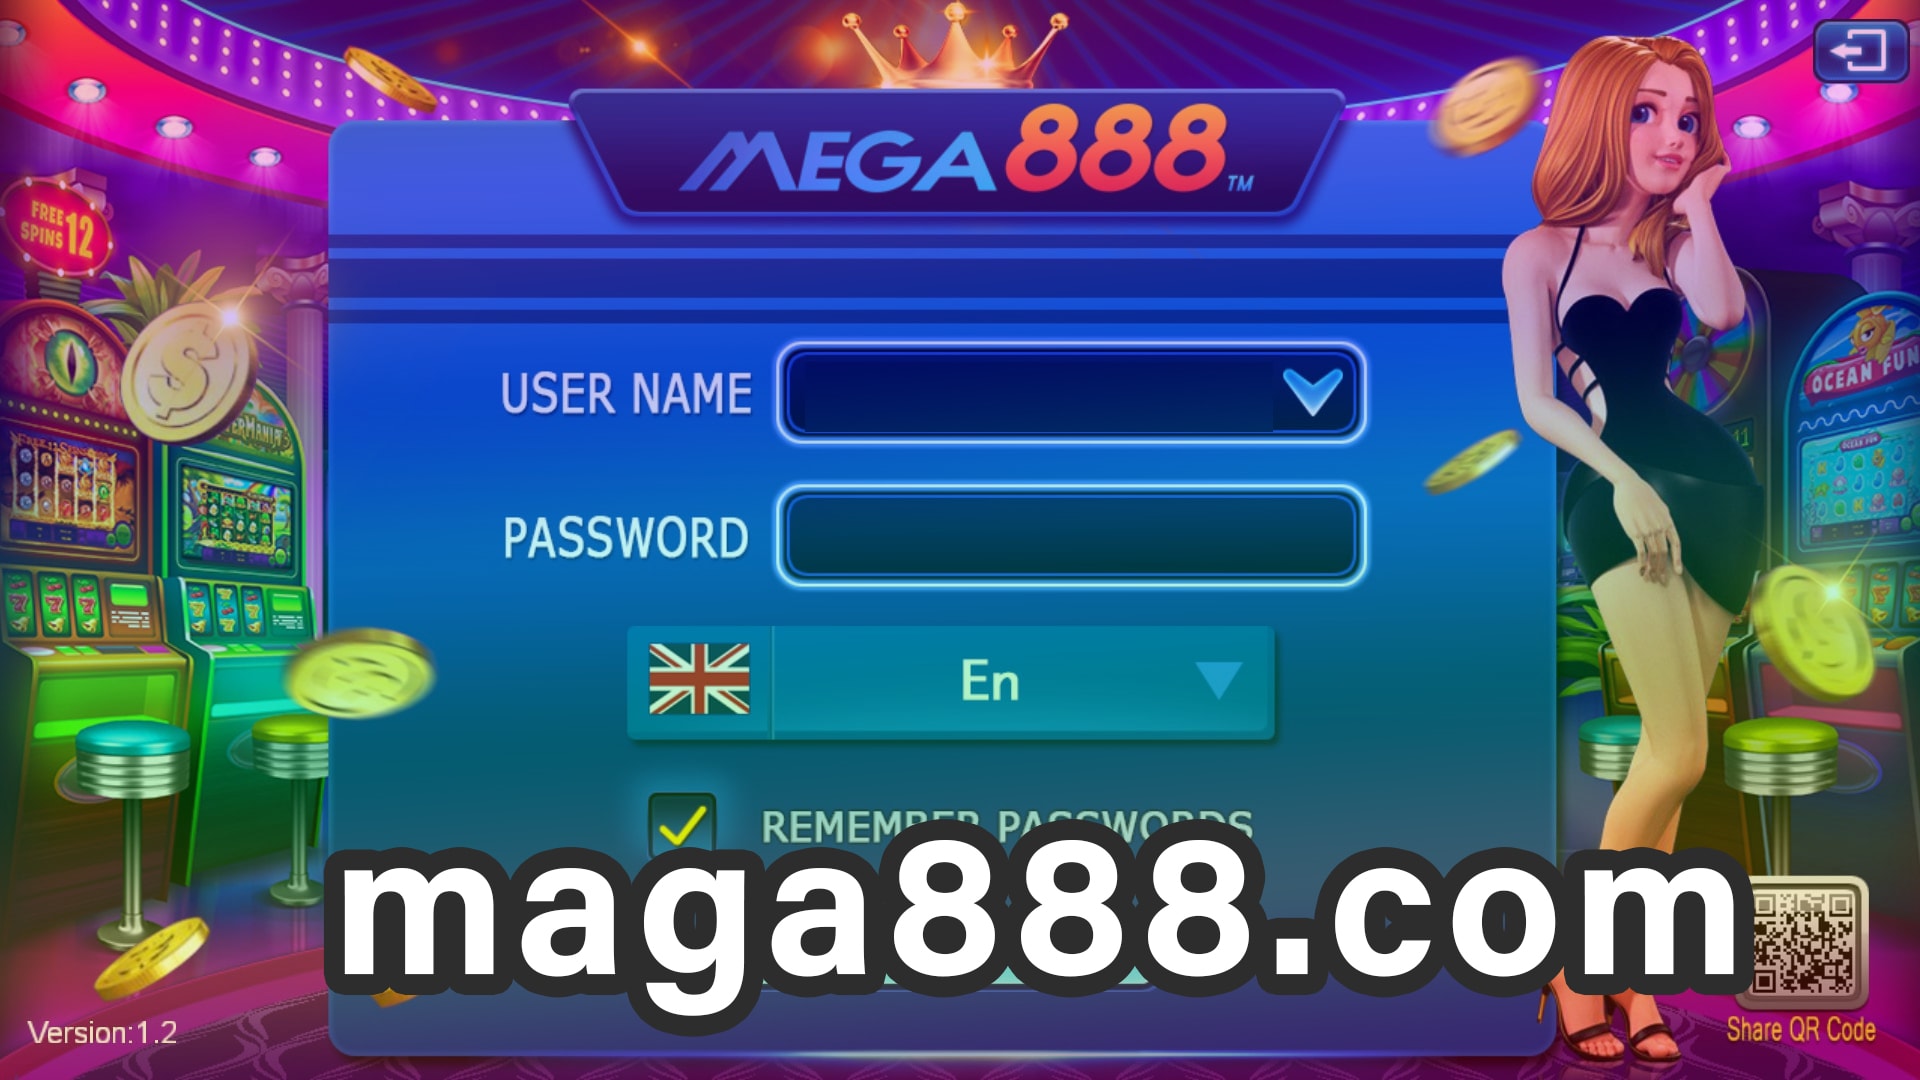 Mega888 original apk download for android 2020